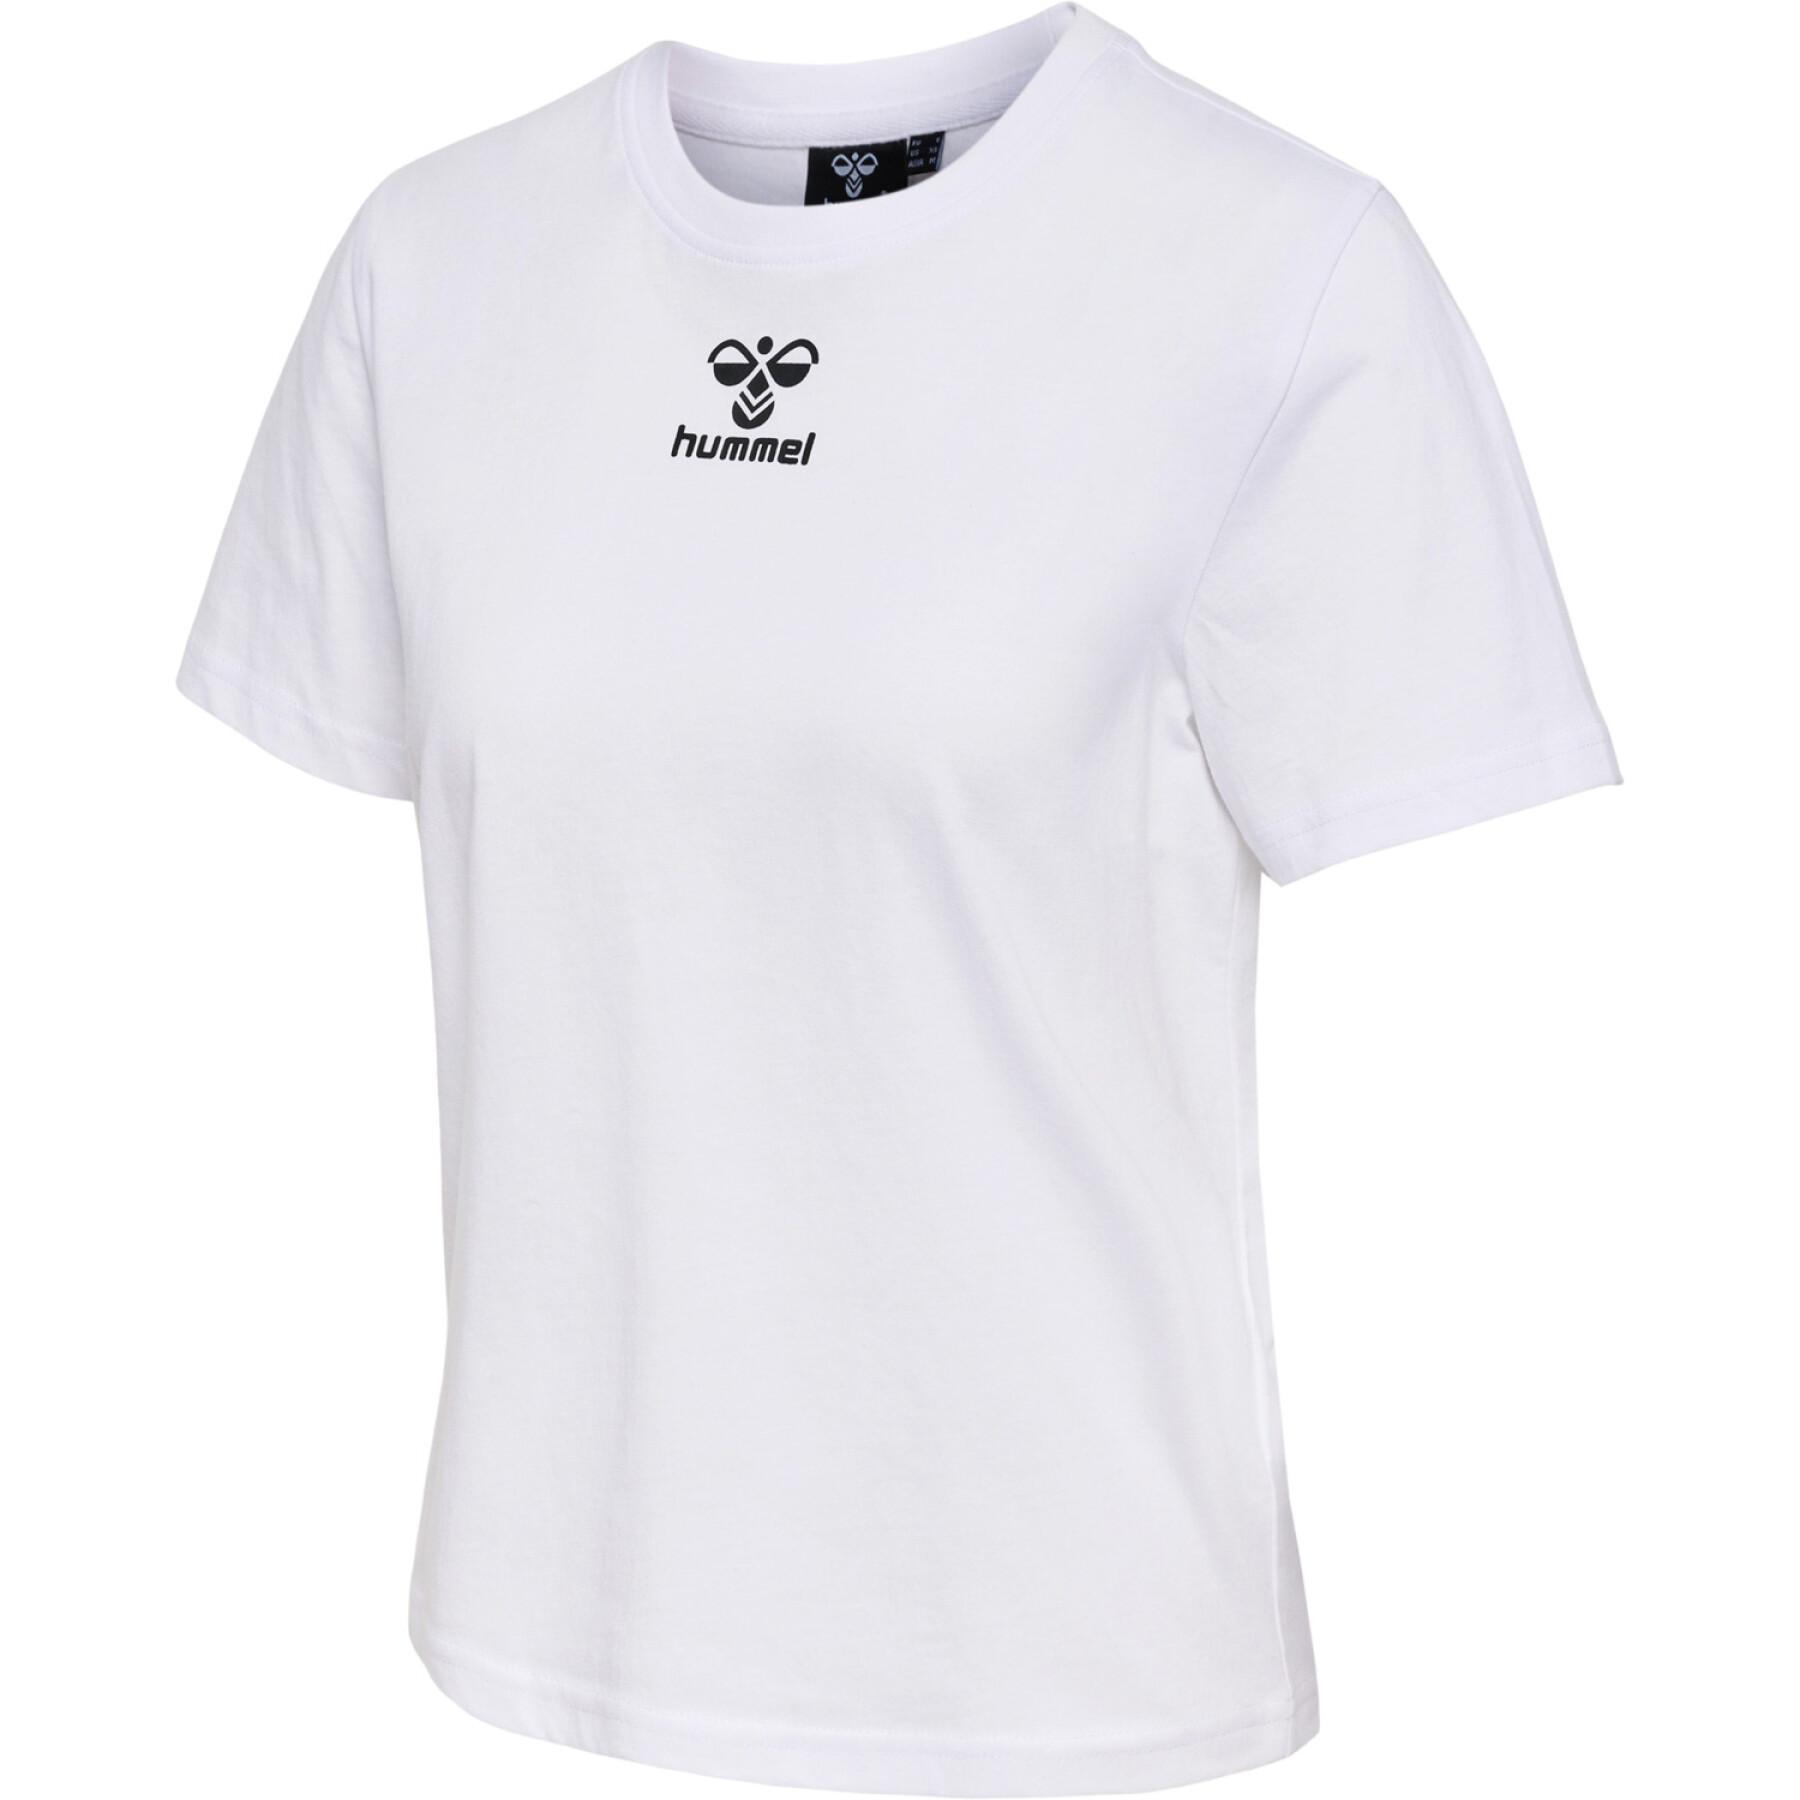 Women's T-shirt Hummel Icons - Hummel - Brands - Lifestyle